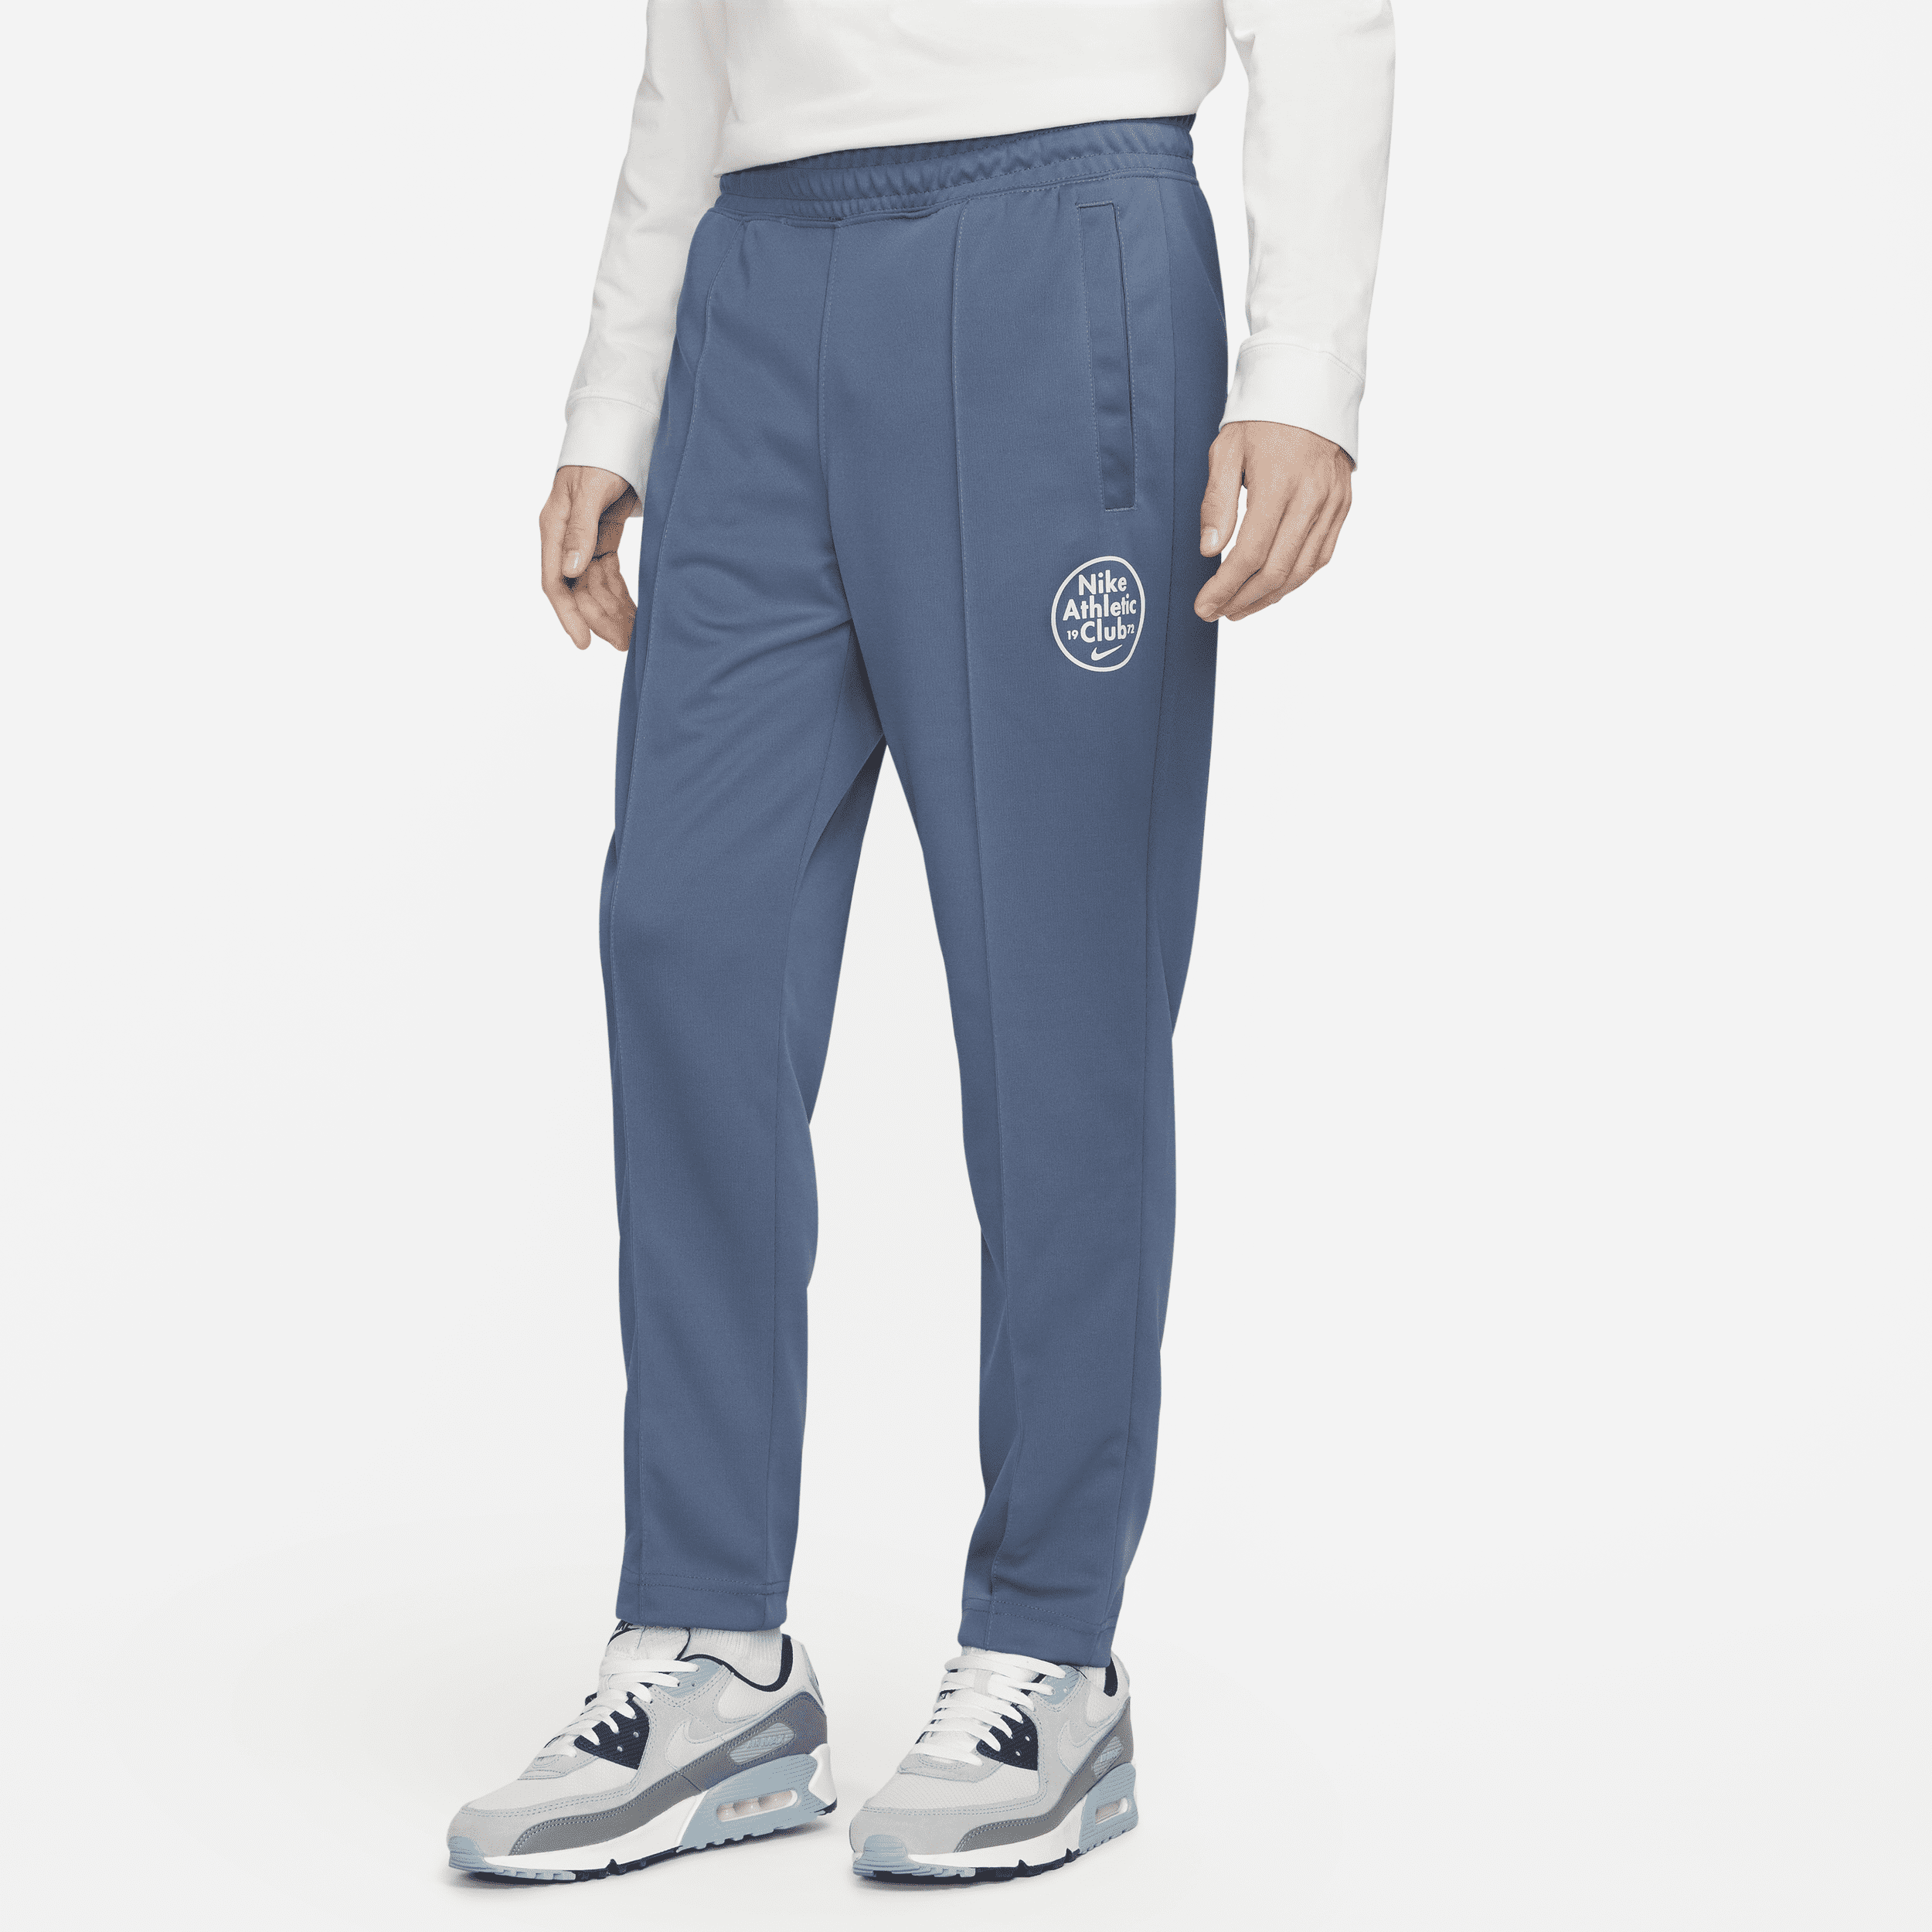 Nike Sportswear plooibroek voor heren - Blauw